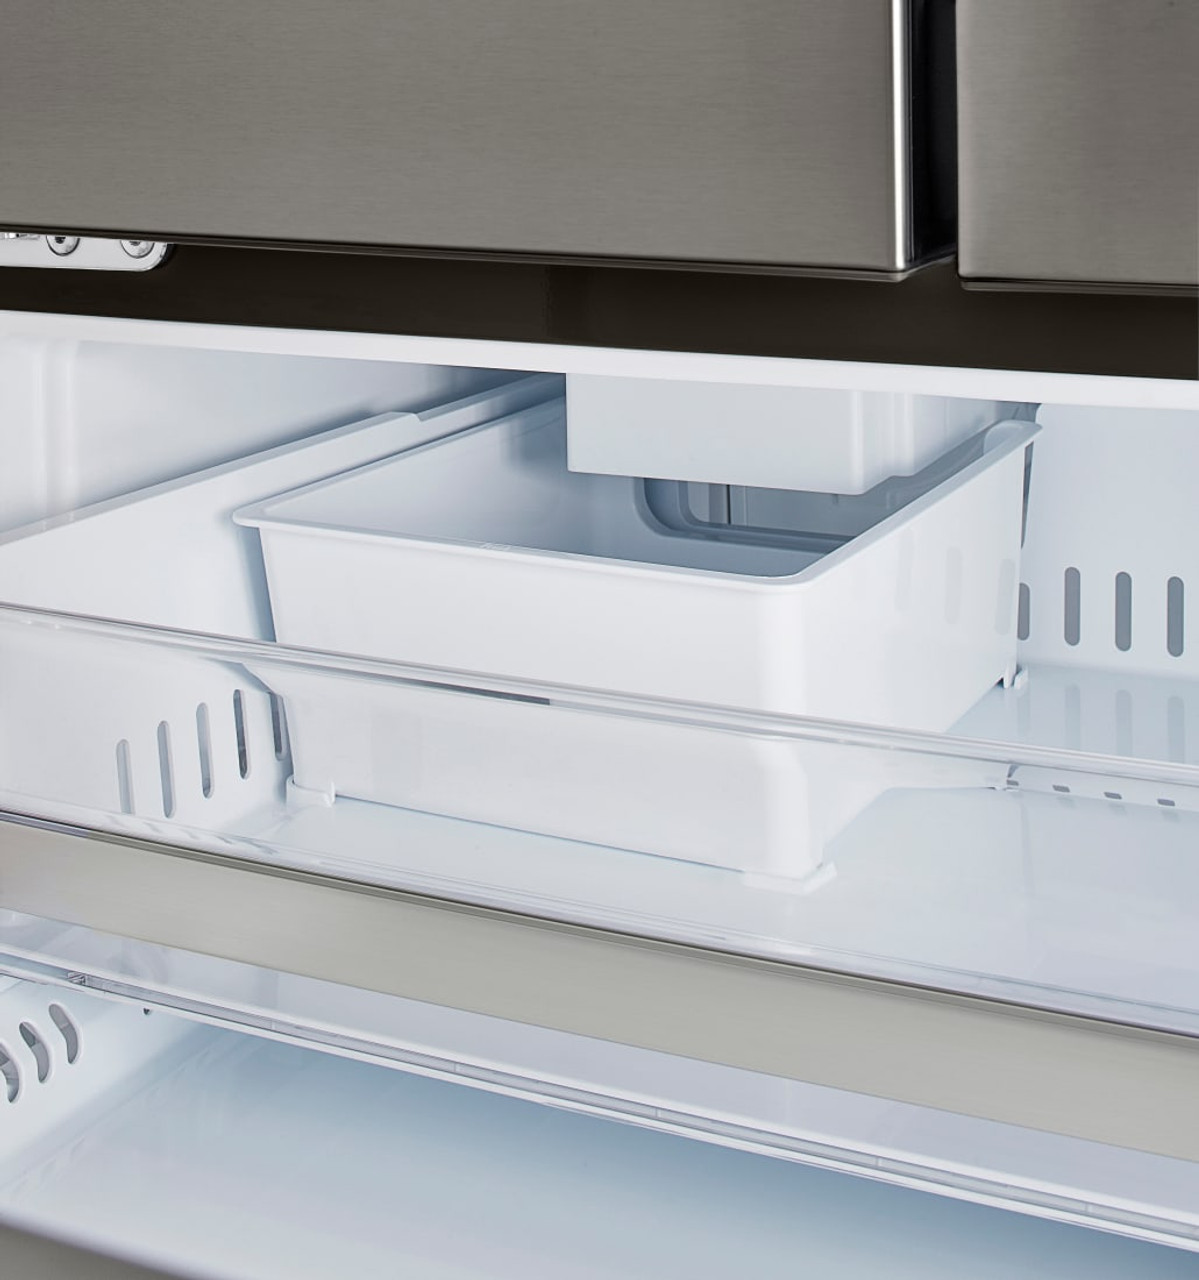 LG 24 cu. ft. Smart Wi-Fi Enabled Door-in-Door Counter-Depth Refrigerator with Craft Ice Maker - LRFDC2406D